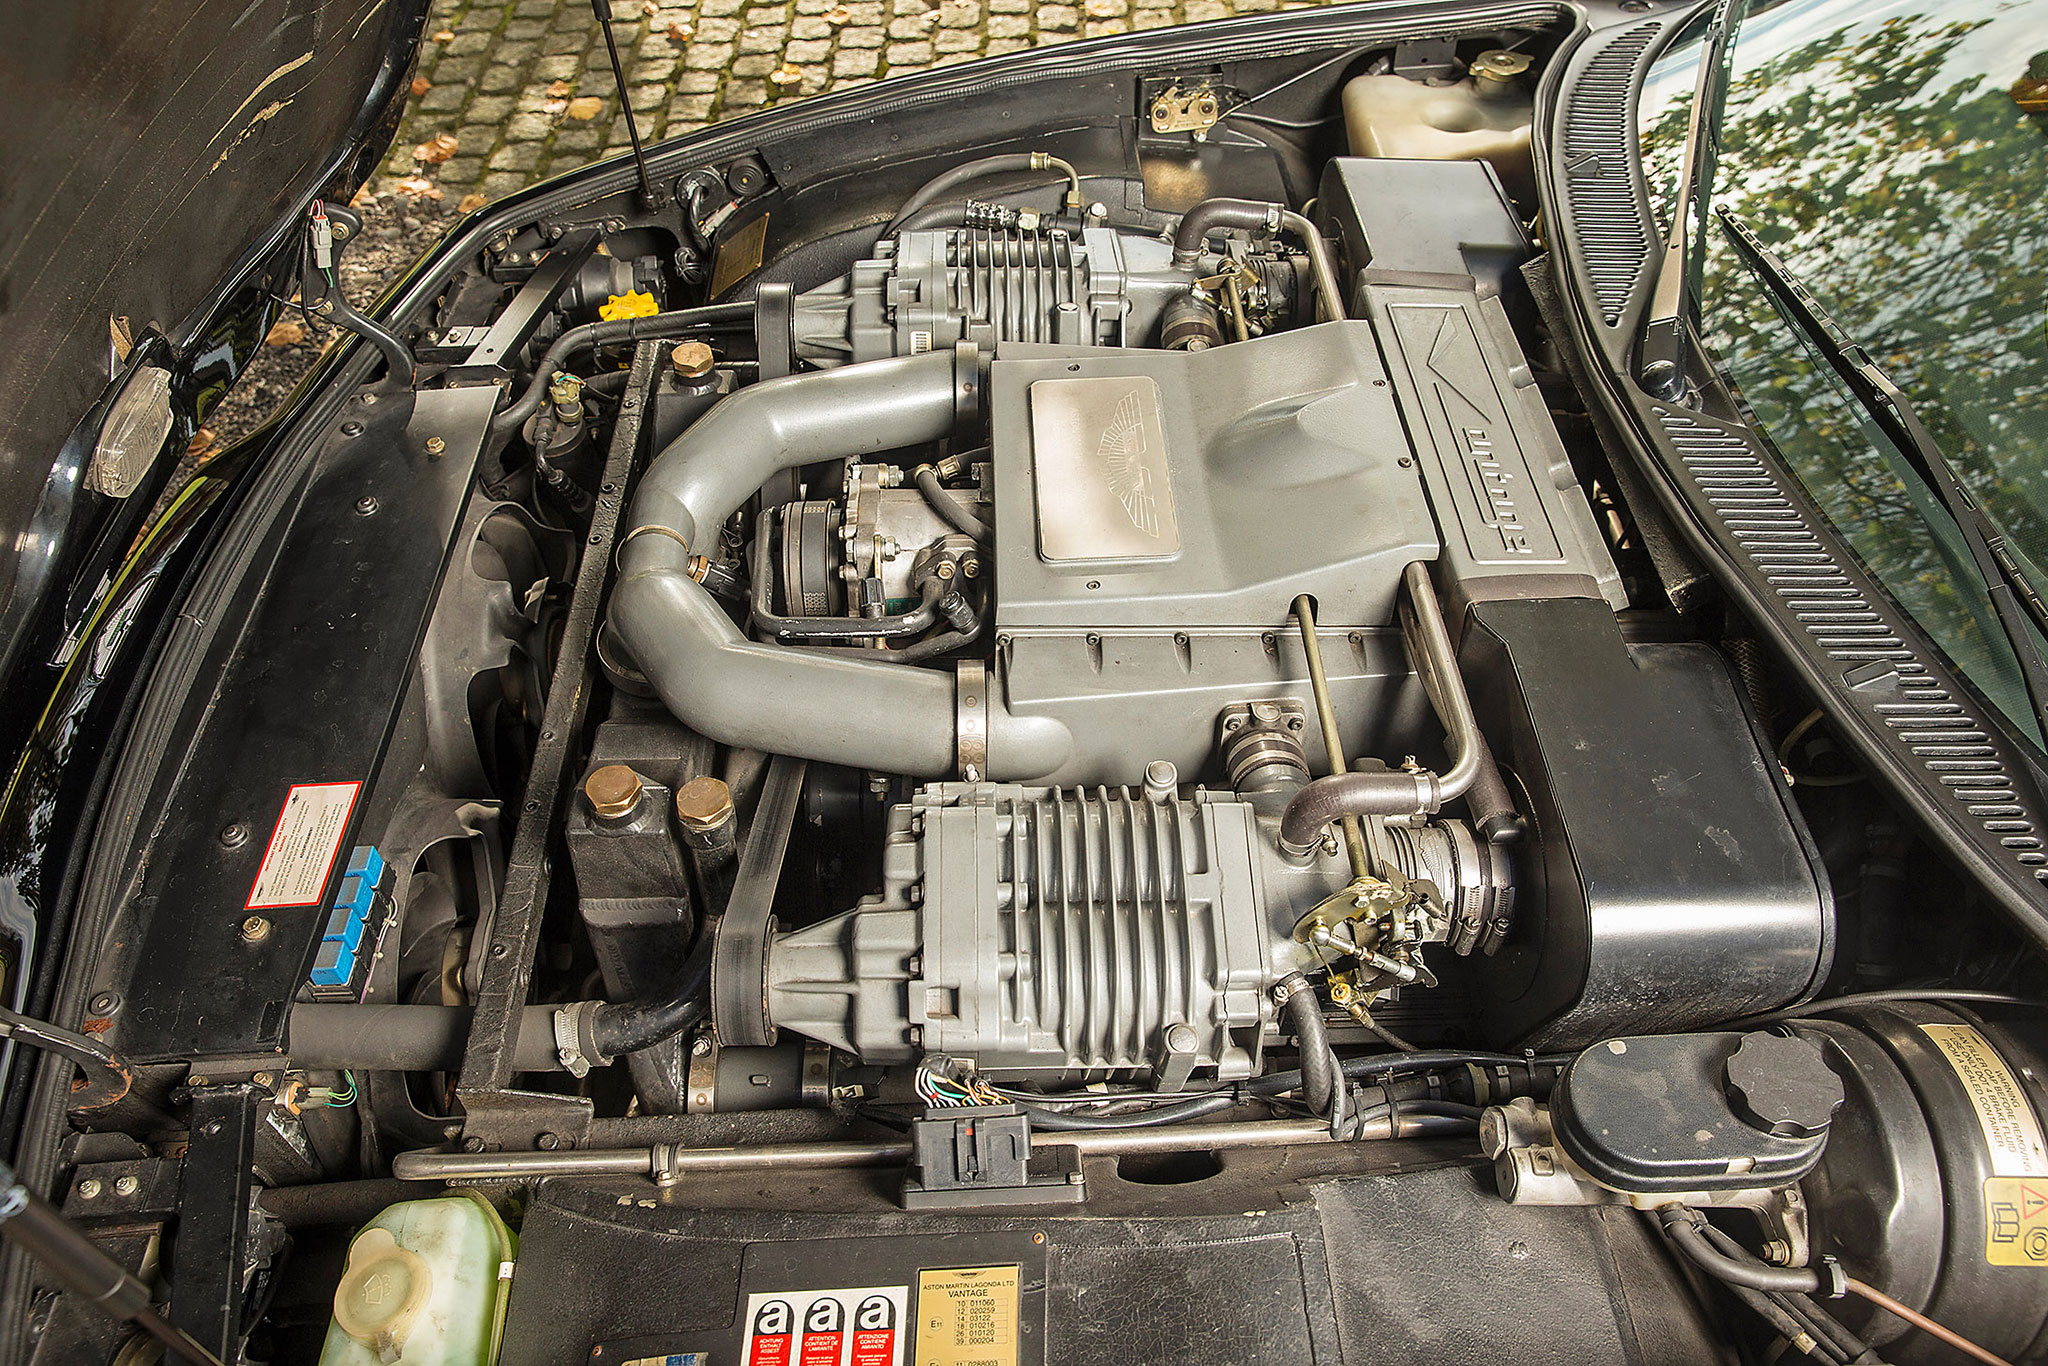 1996 Aston Martin V550 Vantage moteur V8 Supercharged 5340 cm³ et 557 chevaux ©Daniel Reinhard.